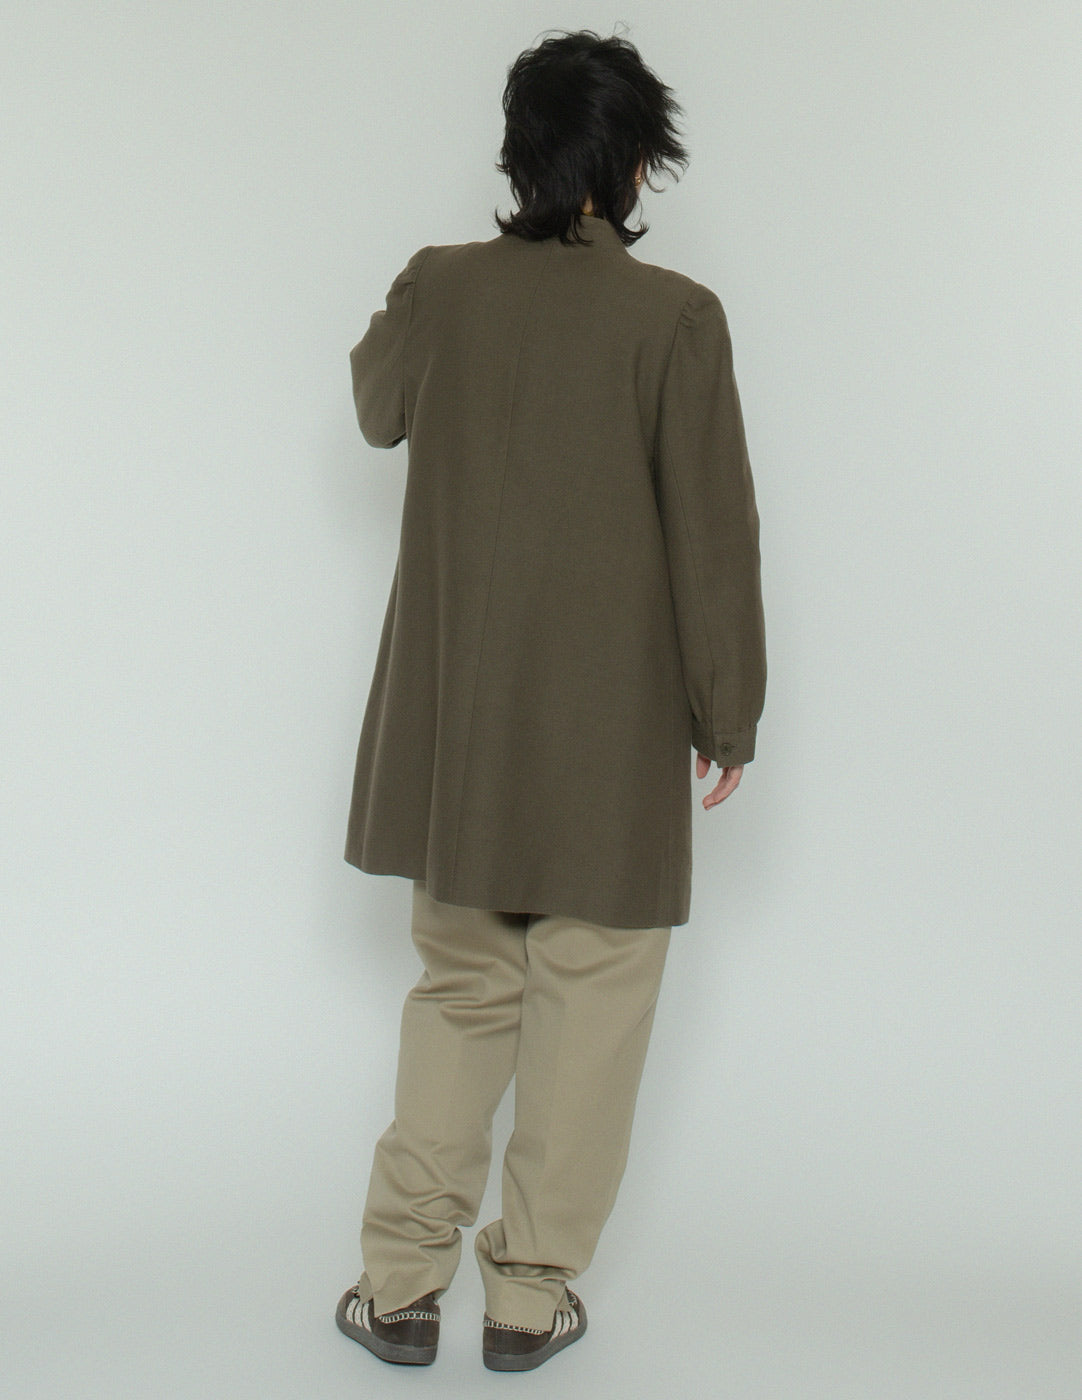 Dries Van Noten olive cotton wool jacket back view